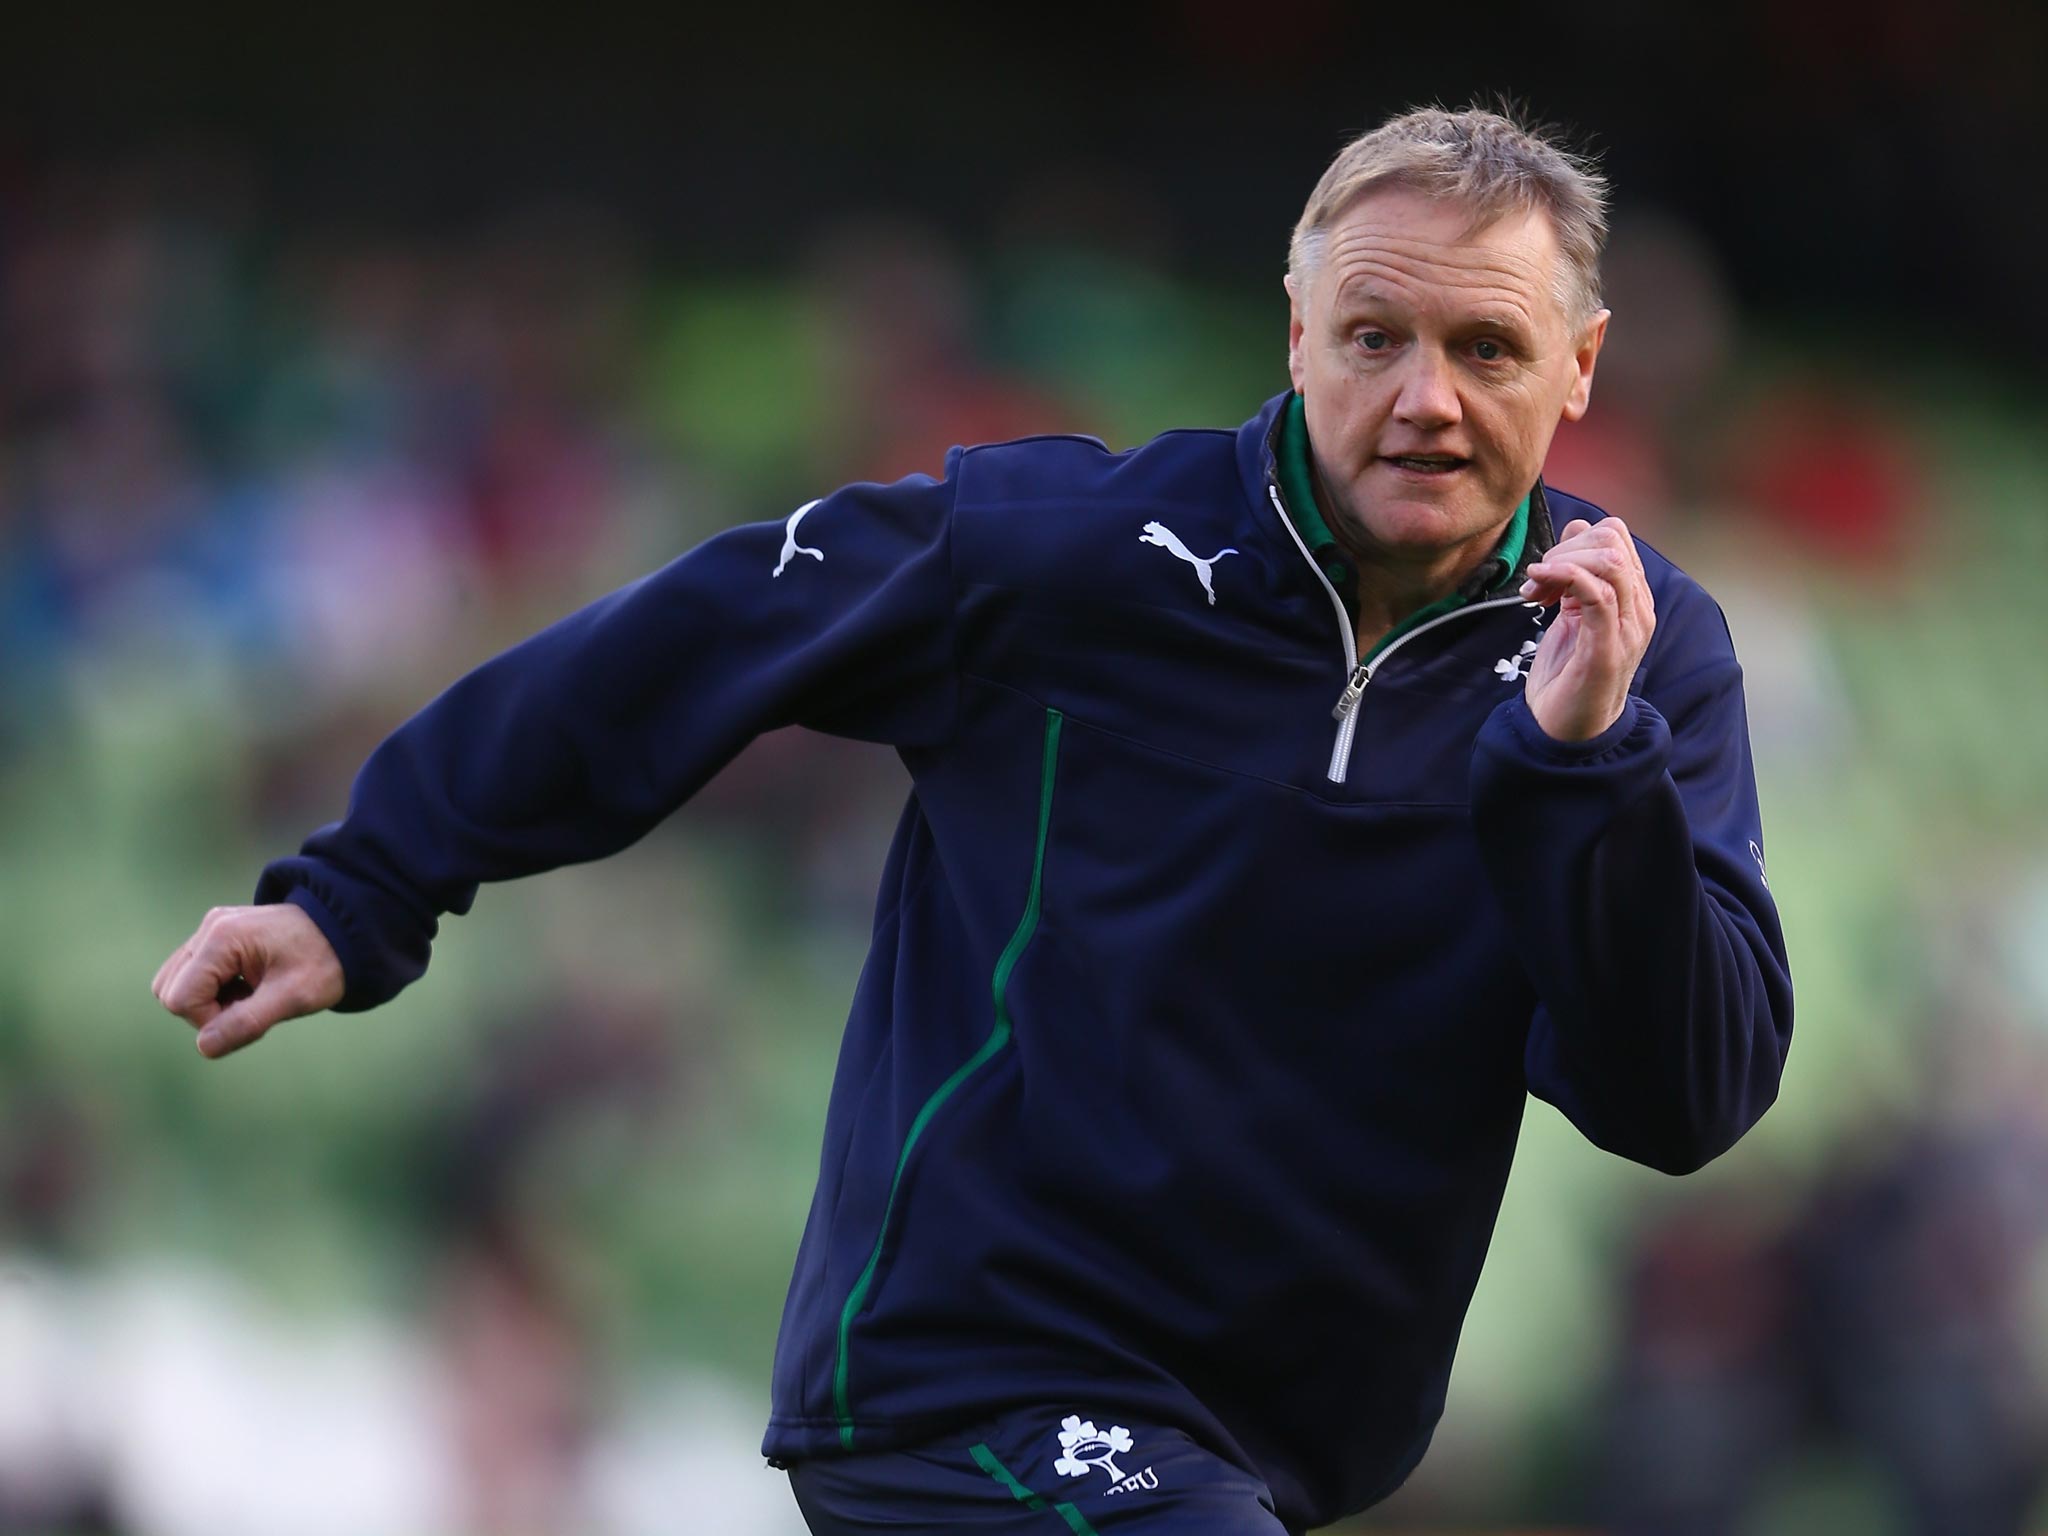 Joe Schmidt has made a major impact since taking over as Ireland head coach